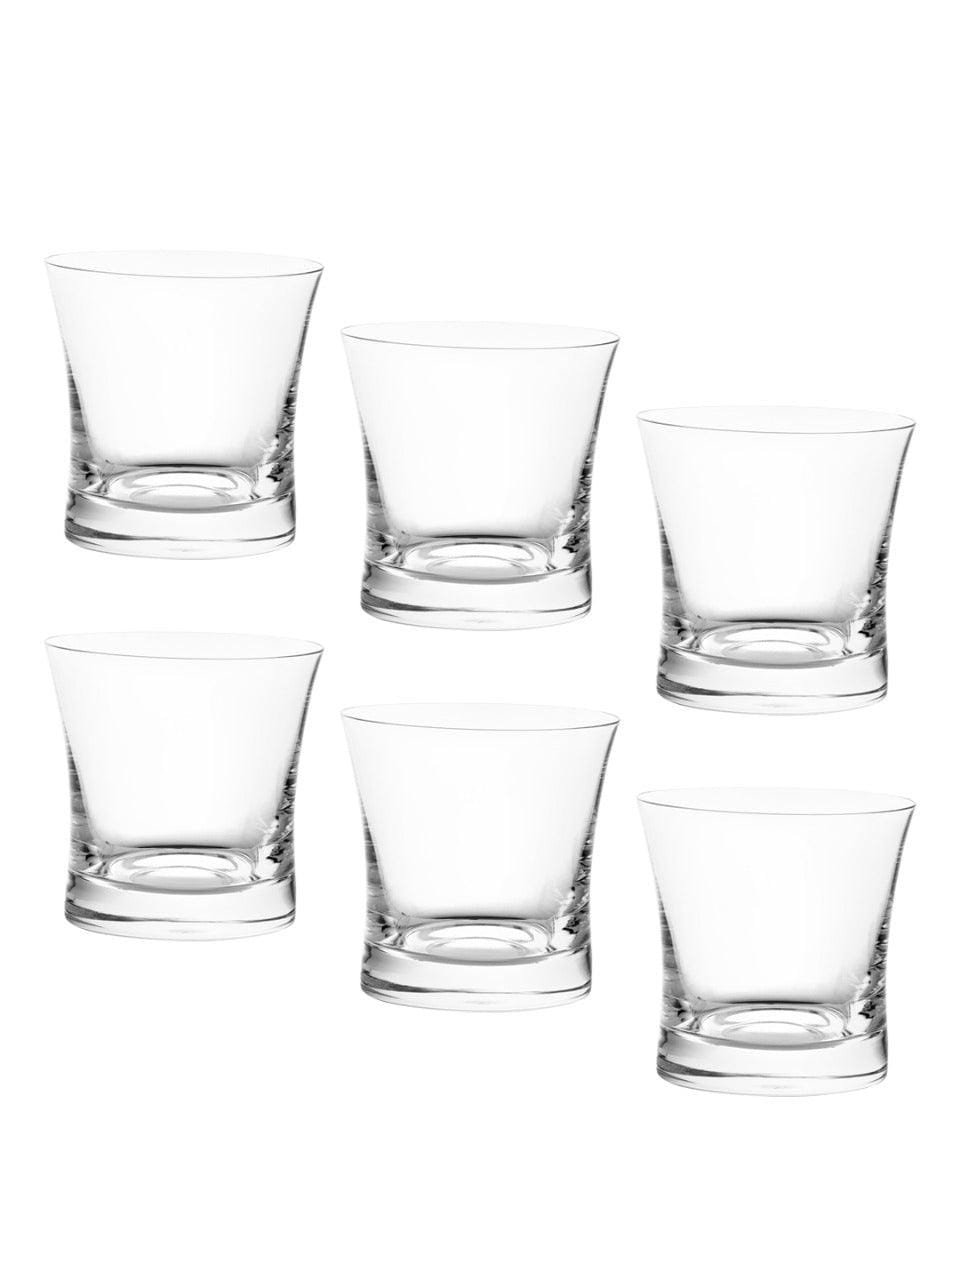 Bohemia Crystal Grace Whiskey Glass Set, 280ml, Set of 6, Lead Free Crystal, Transparent | Whiskey Glass